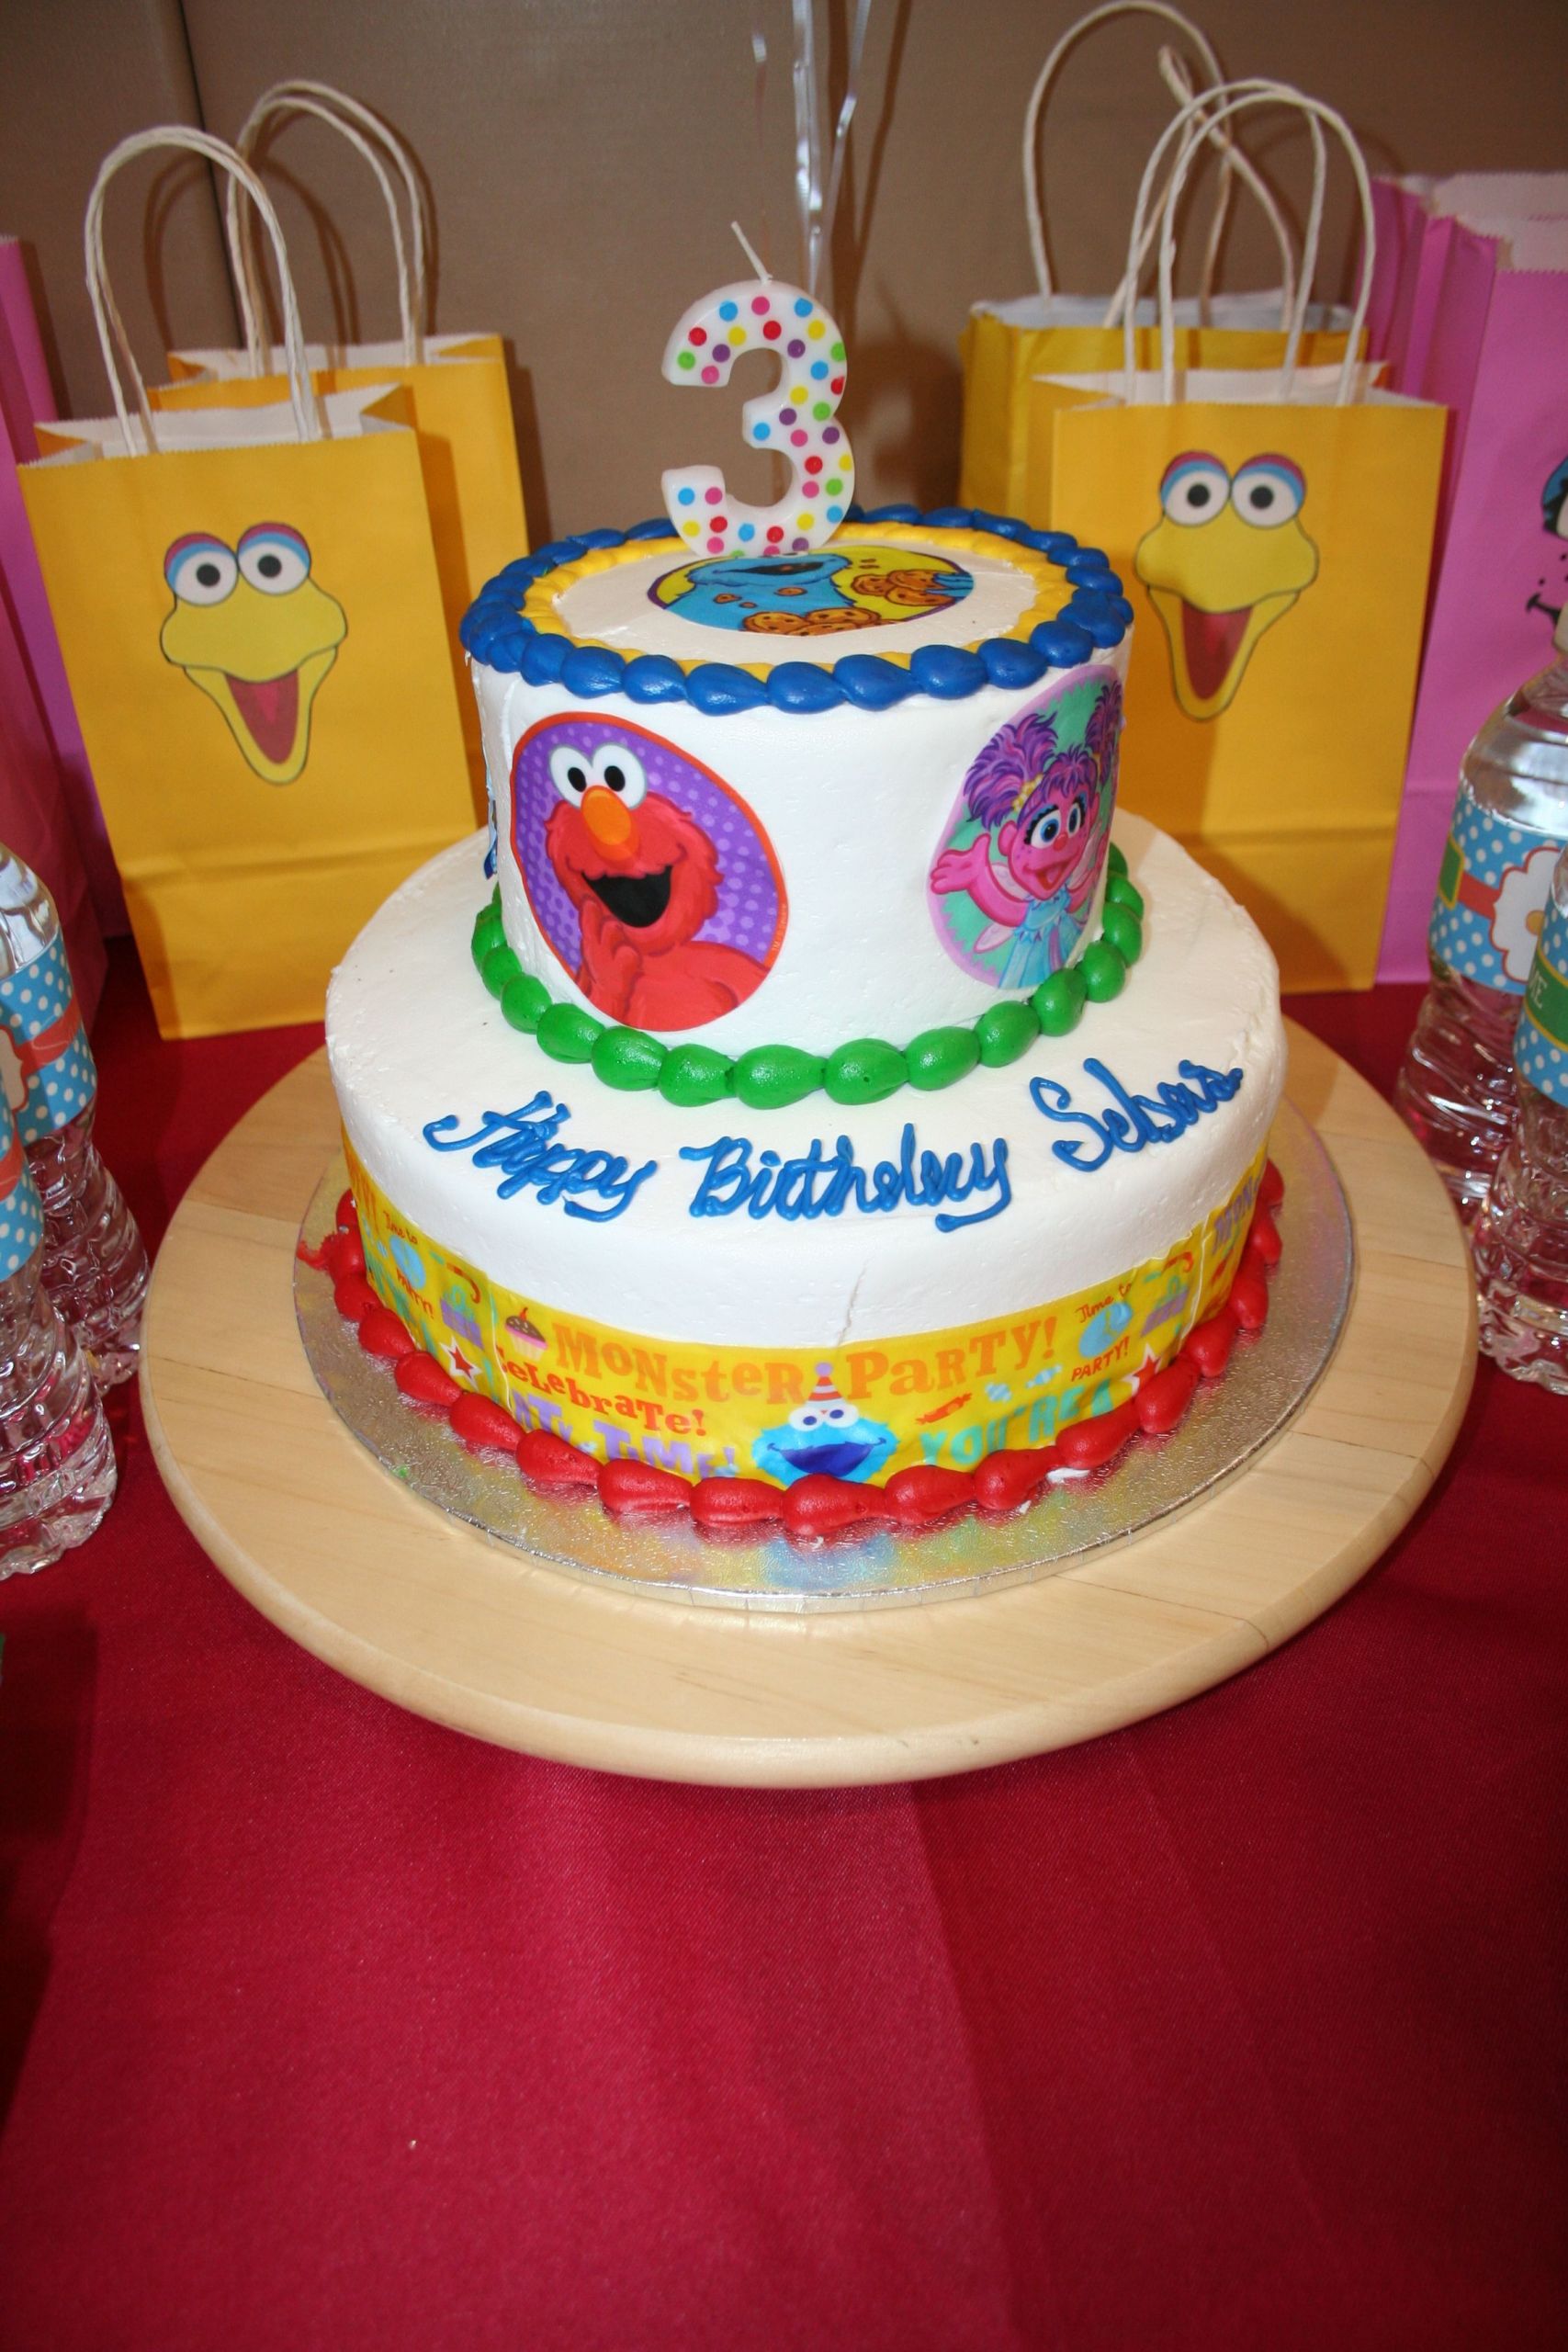 Elmo Birthday Cakes At Walmart
 Sesame Street cake 🎂 it was from Walmart